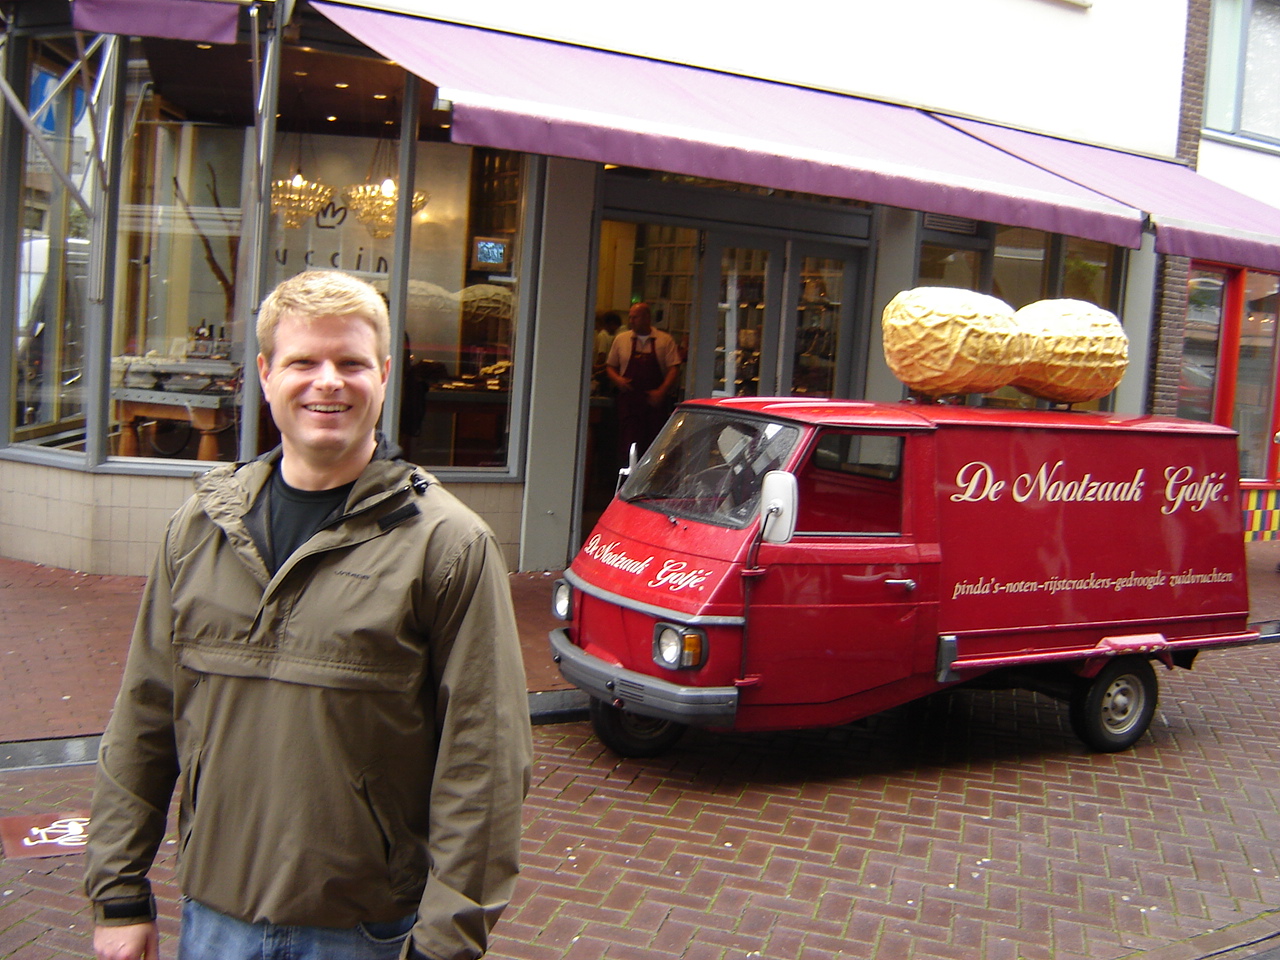 Amsterdam chocolate shops